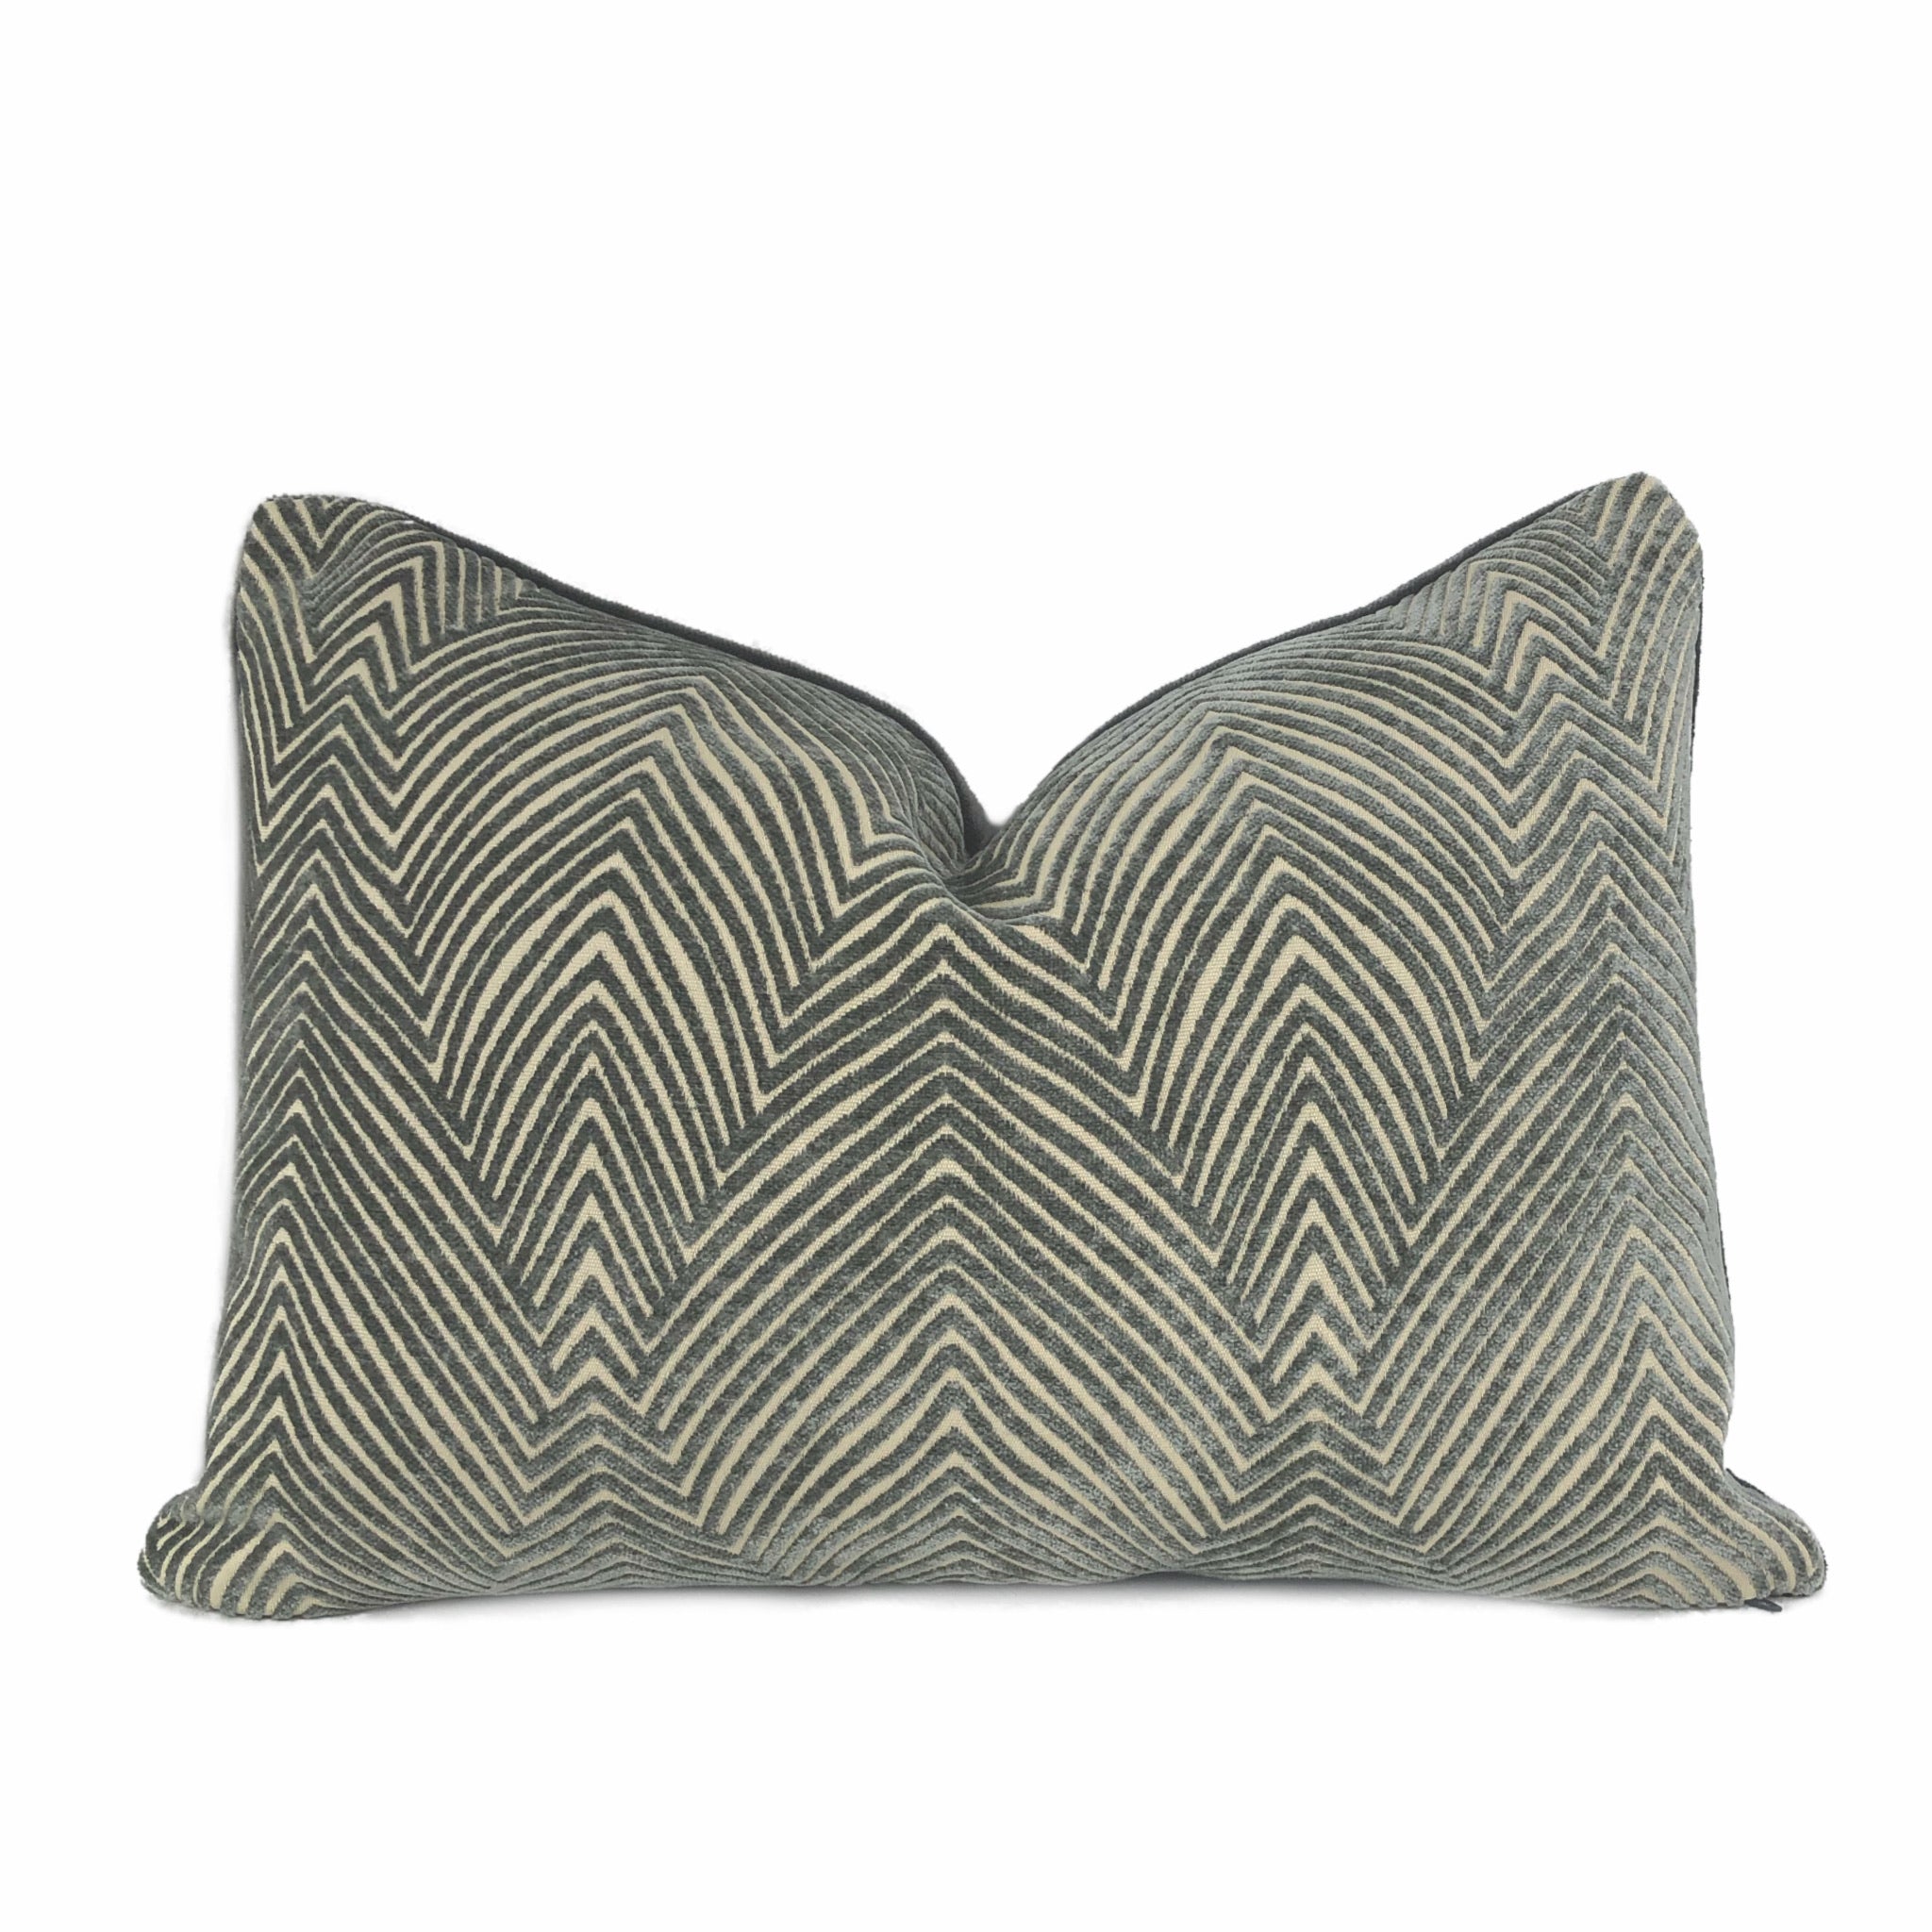 Chrysler Art Deco Smoke Gray Textured Pillow Cover